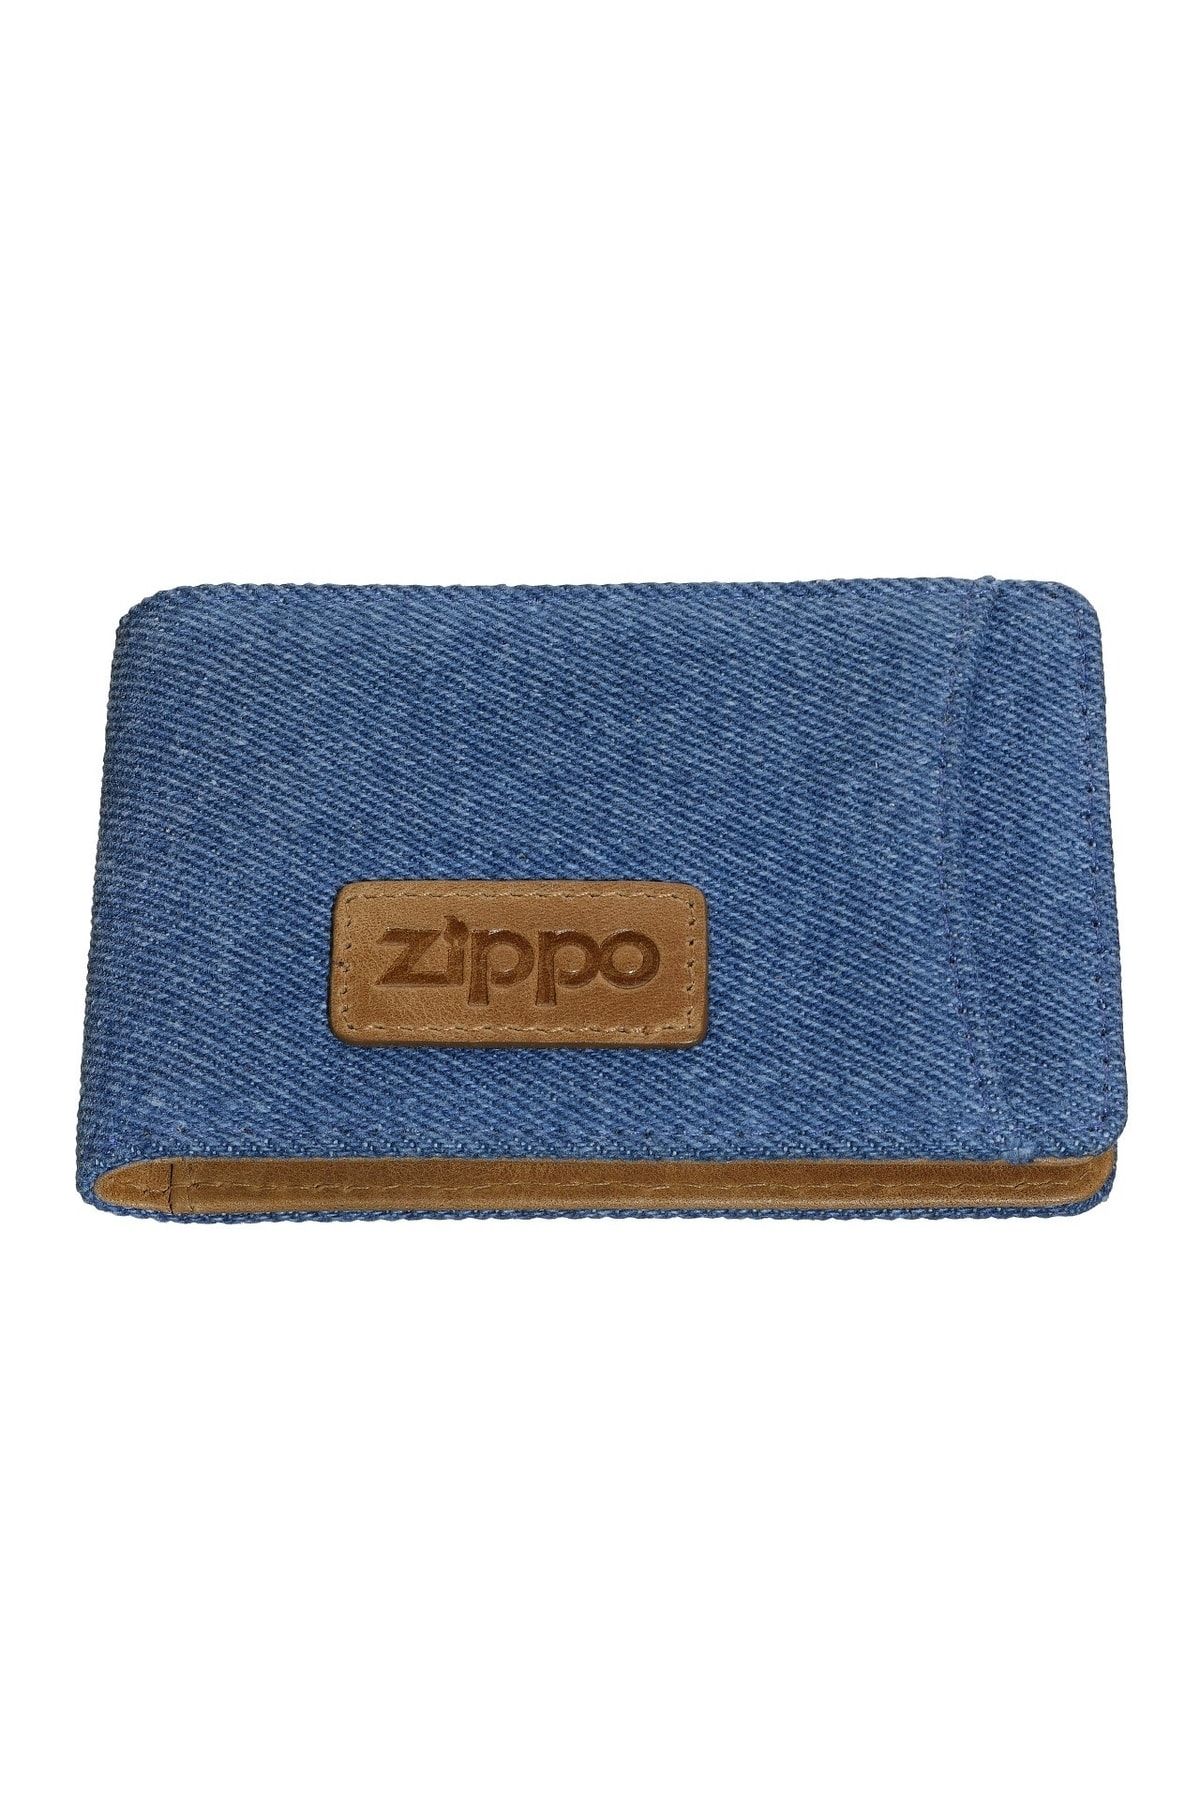 Zippo Cüzdan Card Case Denim Blue Tan Vertical 2007143